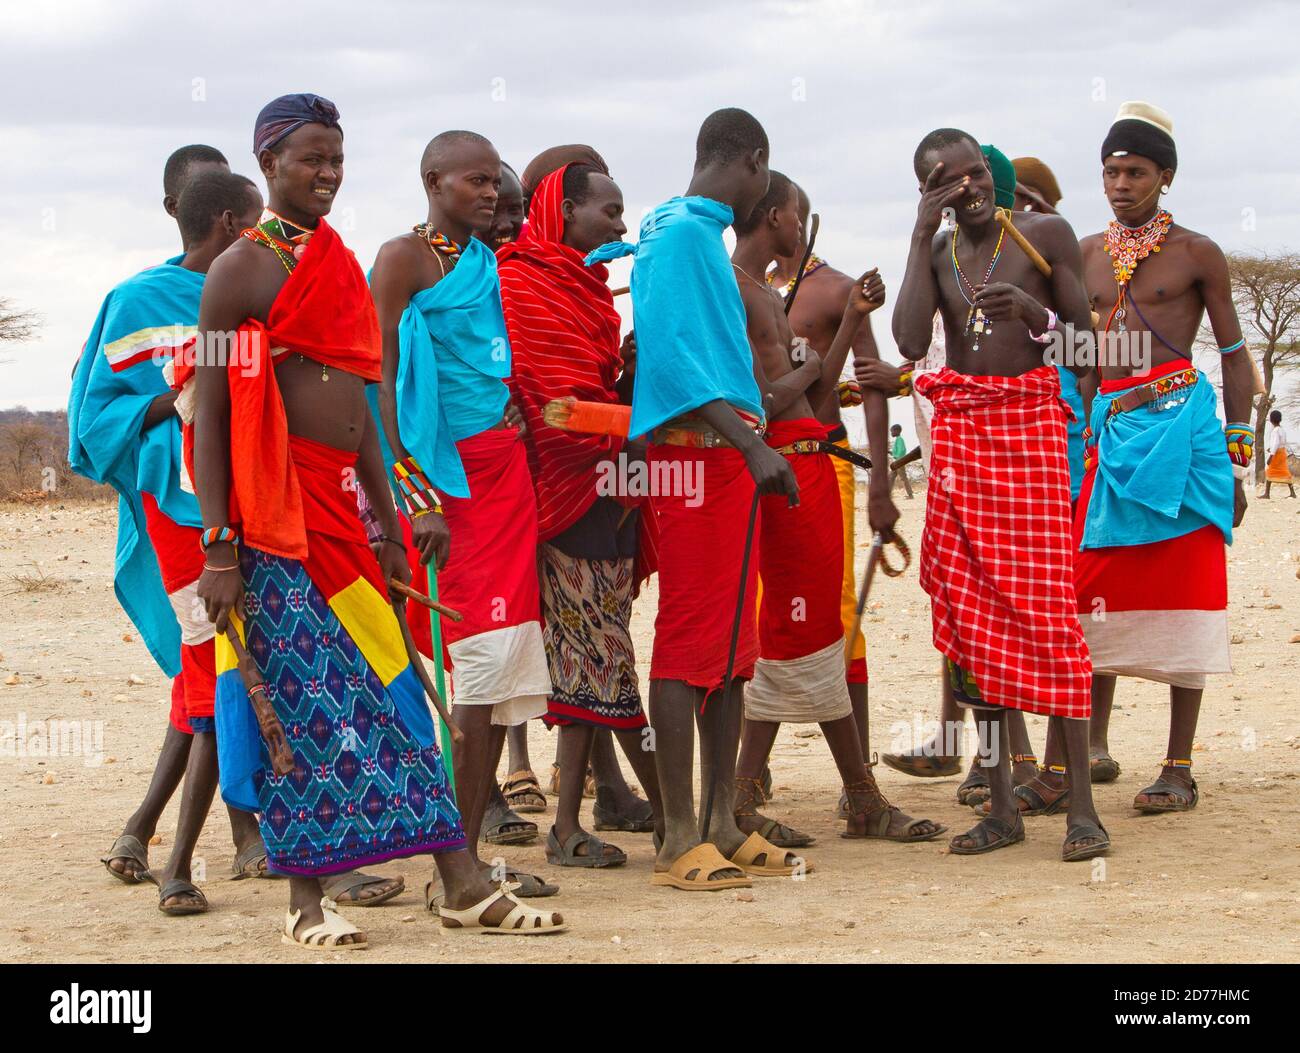 Membres de la tribu Samburu dans une danse traditionnelle, Kenya. Les Samburu sont un peuple nilotique du centre-nord du Kenya. Samburu sont pastorales semi-nomades Banque D'Images